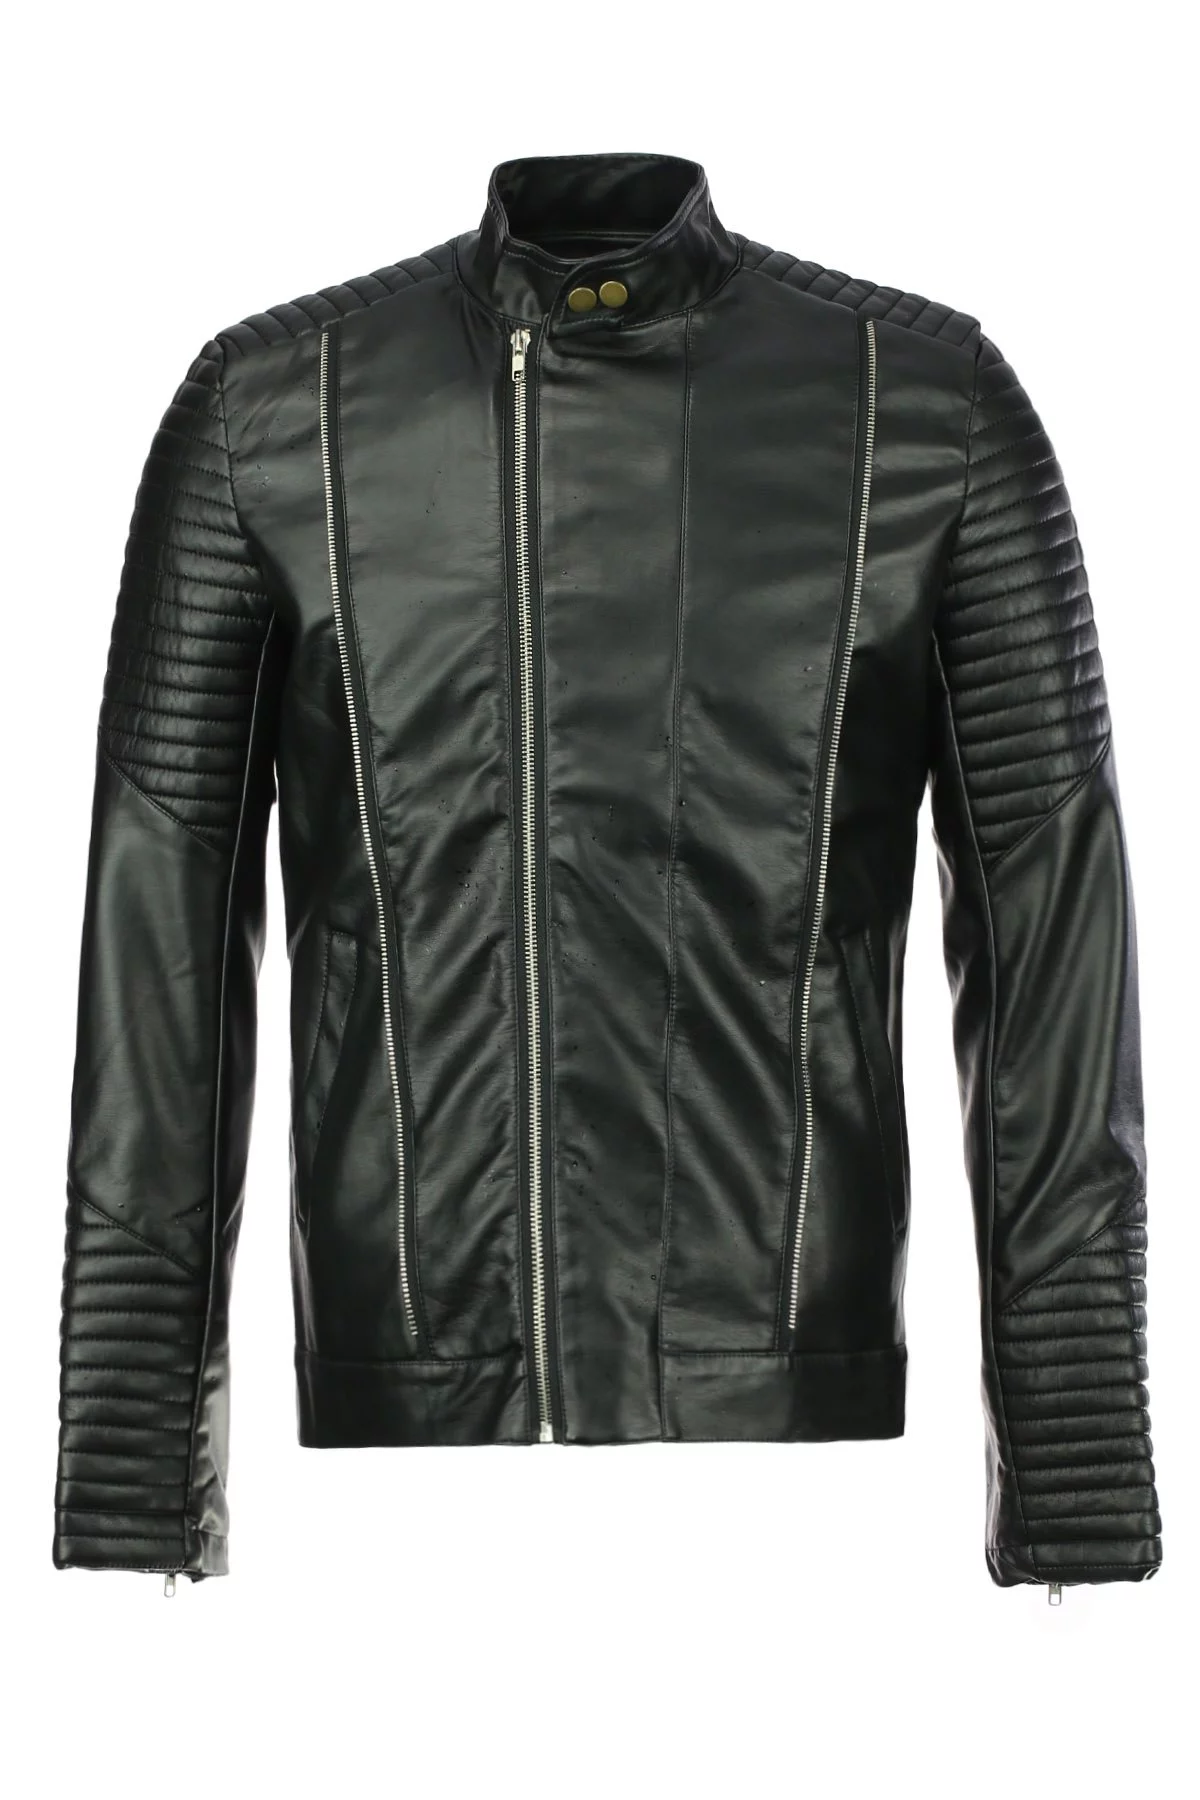 Stand Collar Multi-Zipper Stripes Knurling Long Sleeve PU-Leather Jacket For Men Black